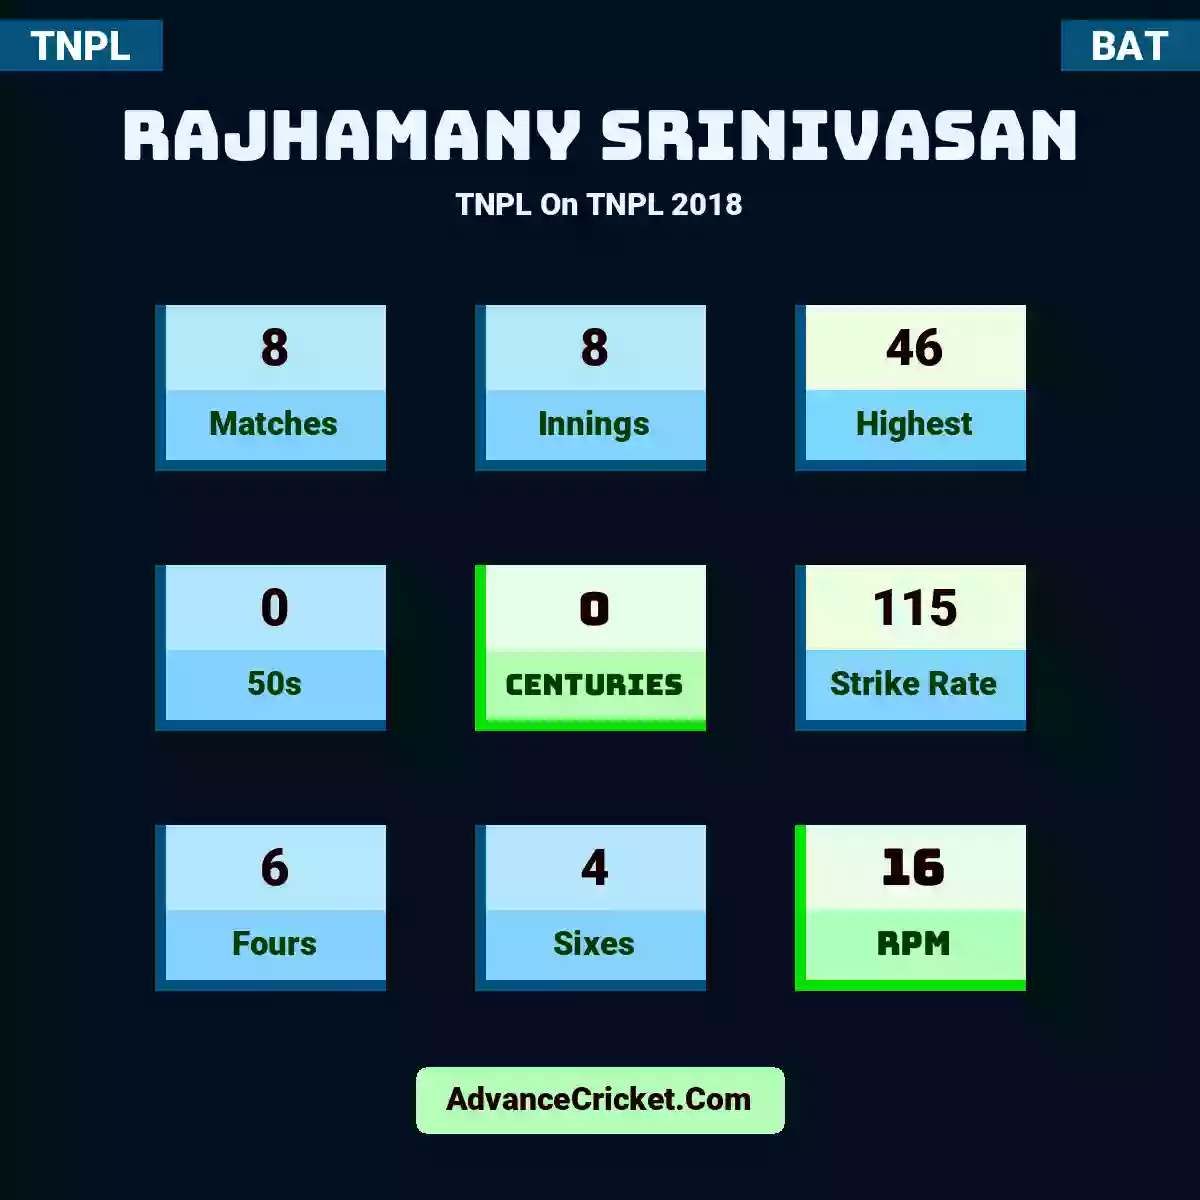 Rajhamany Srinivasan TNPL  On TNPL 2018, Rajhamany Srinivasan played 8 matches, scored 46 runs as highest, 0 half-centuries, and 0 centuries, with a strike rate of 115. R.Srinivasan hit 6 fours and 4 sixes, with an RPM of 16.